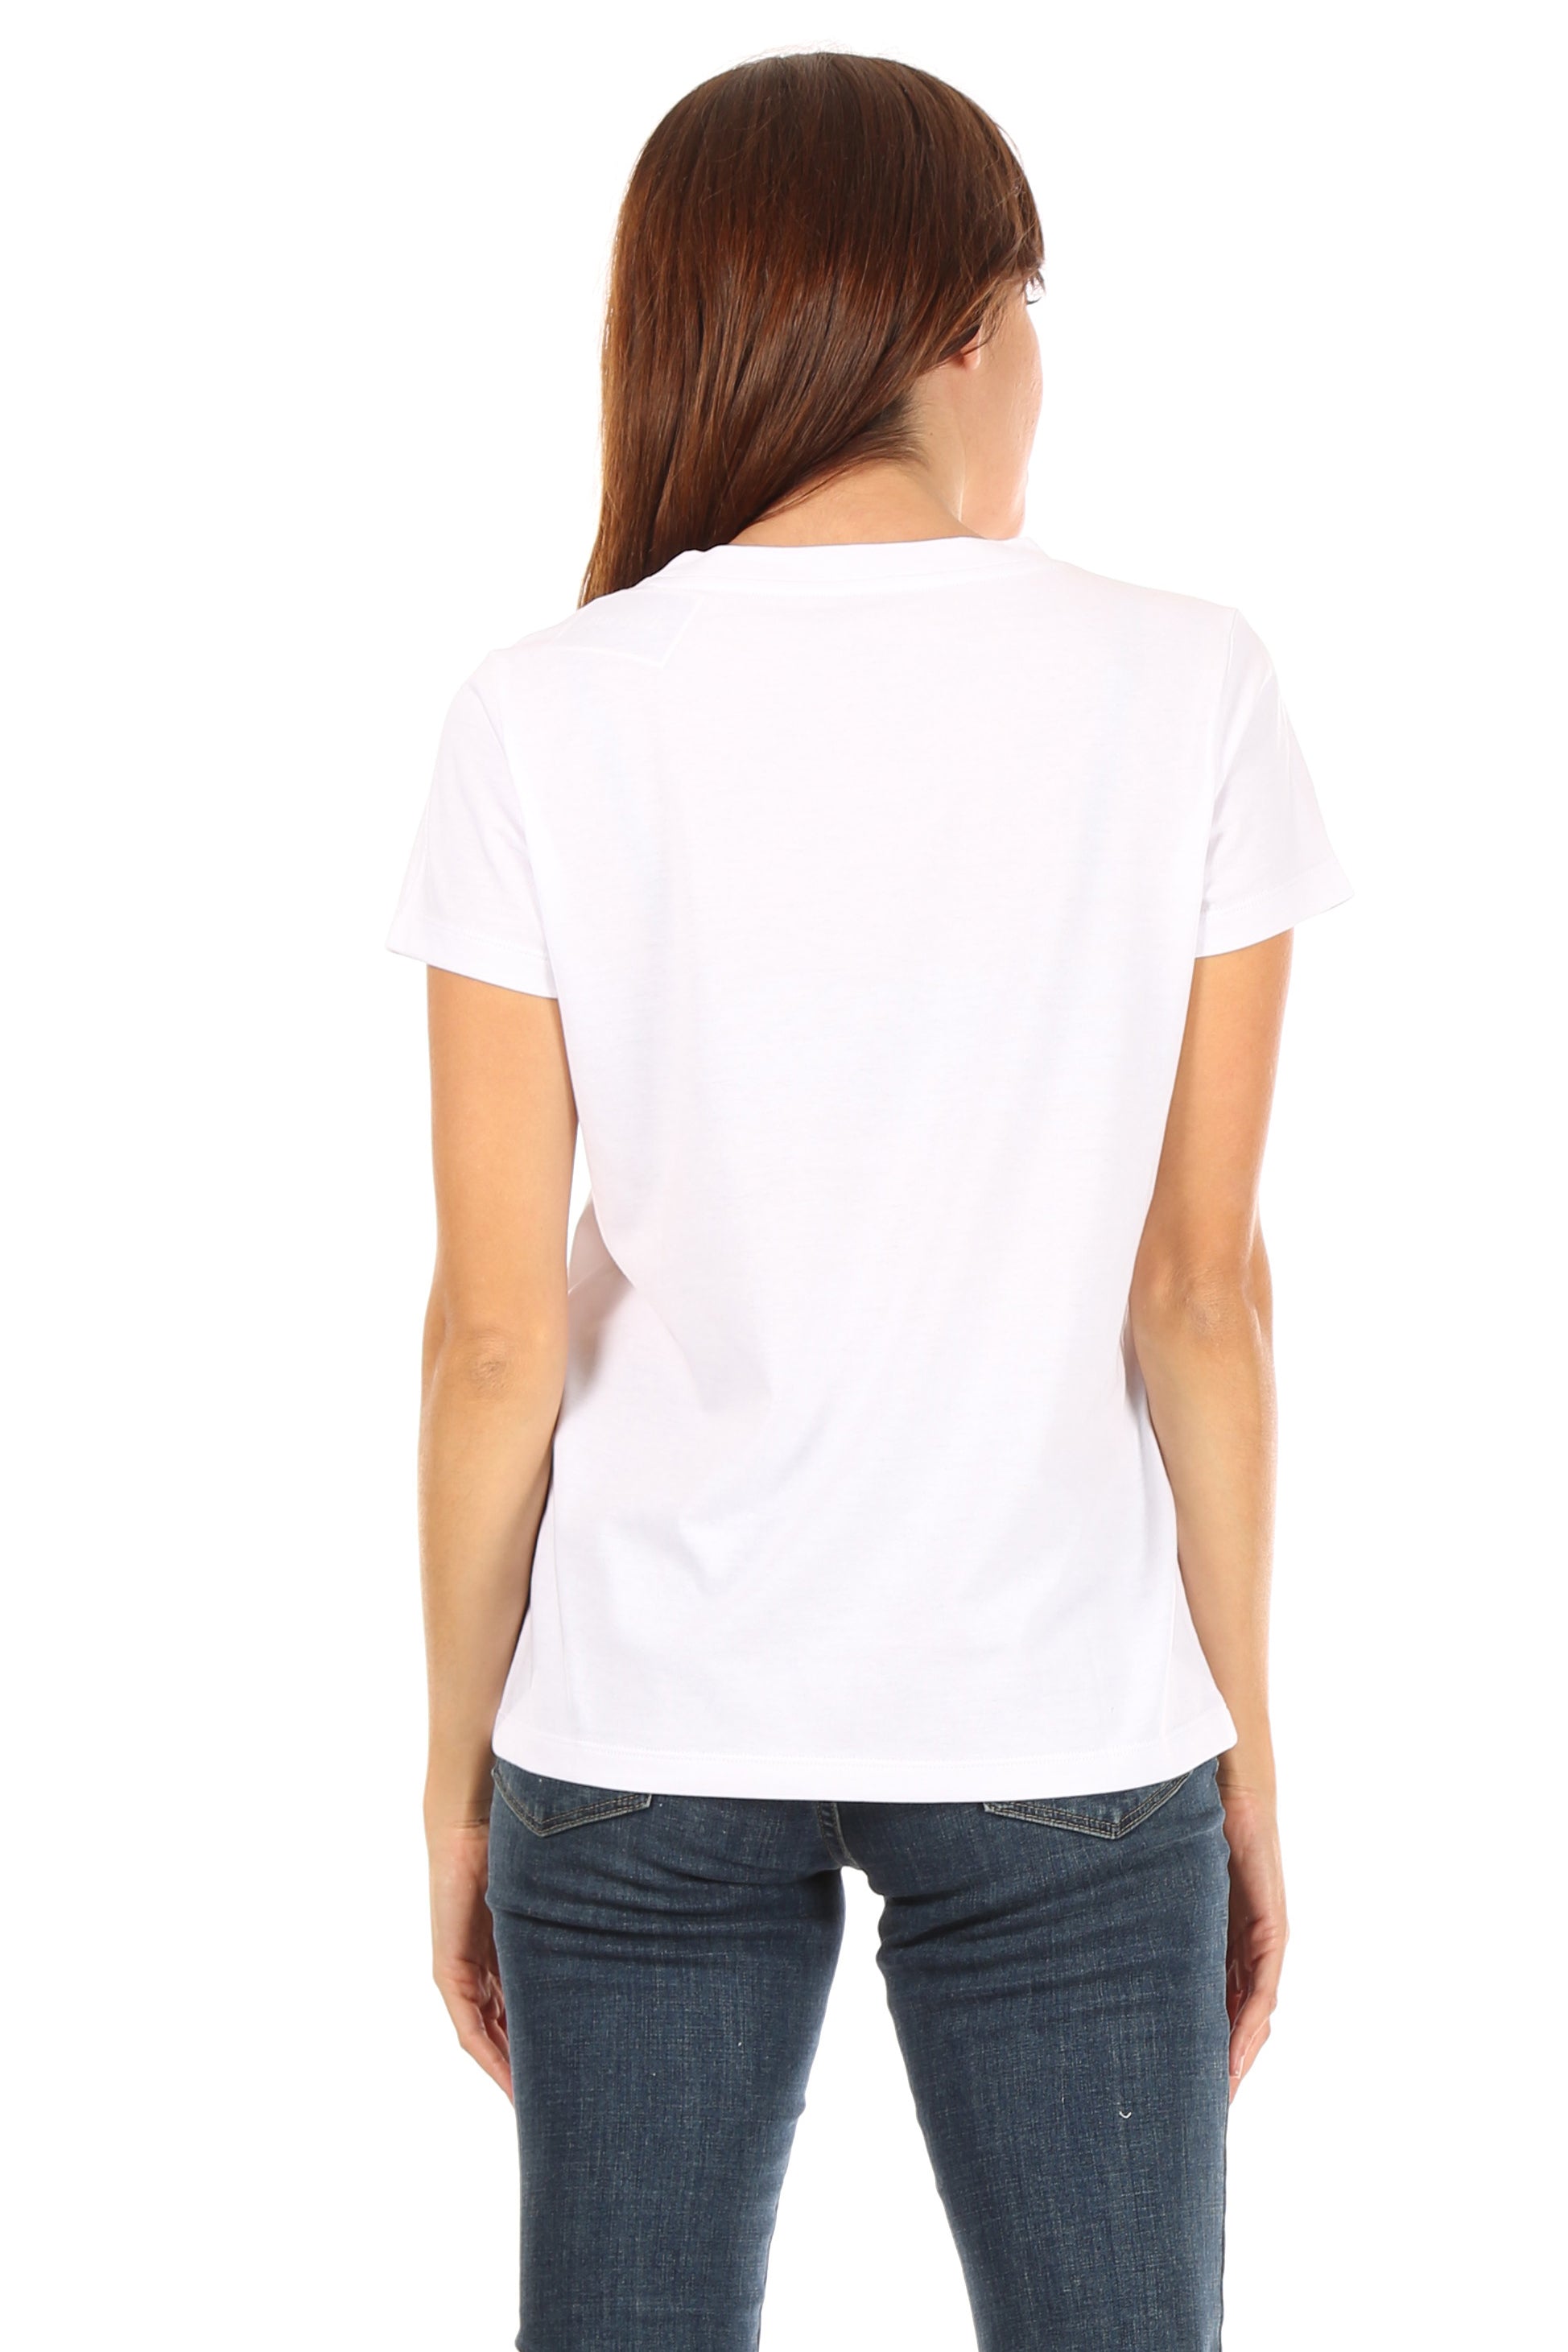 Women's "LUCKY CHARM" Short Sleeve Icon T-Shirt - Shop Rae Dunn Apparel and Sleepwear